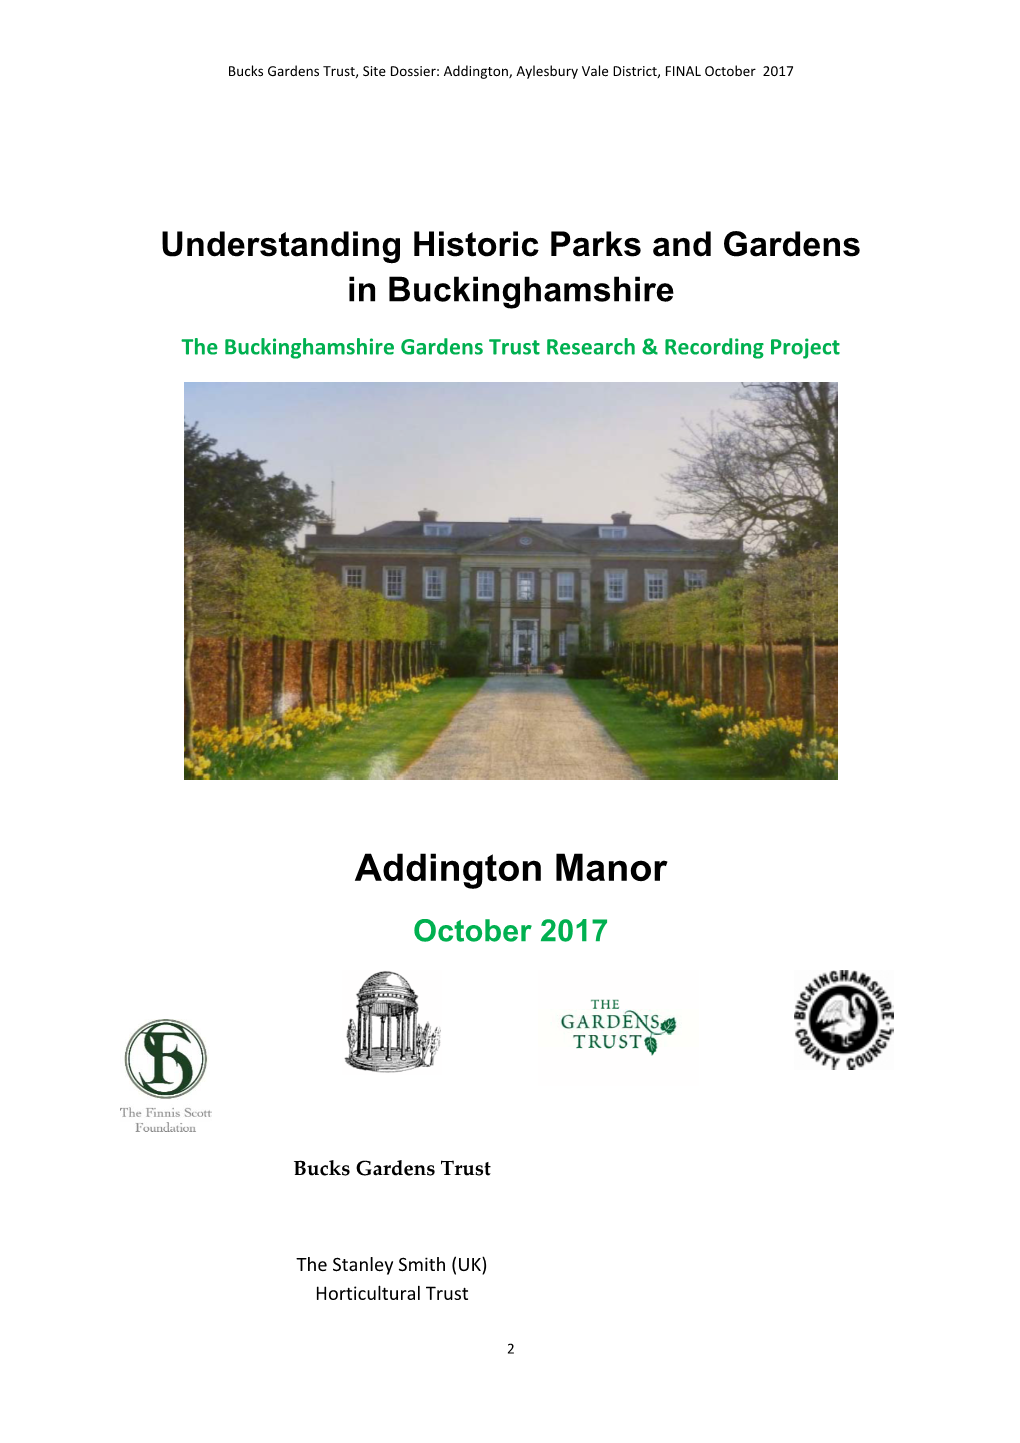 Addington Manor October 2017